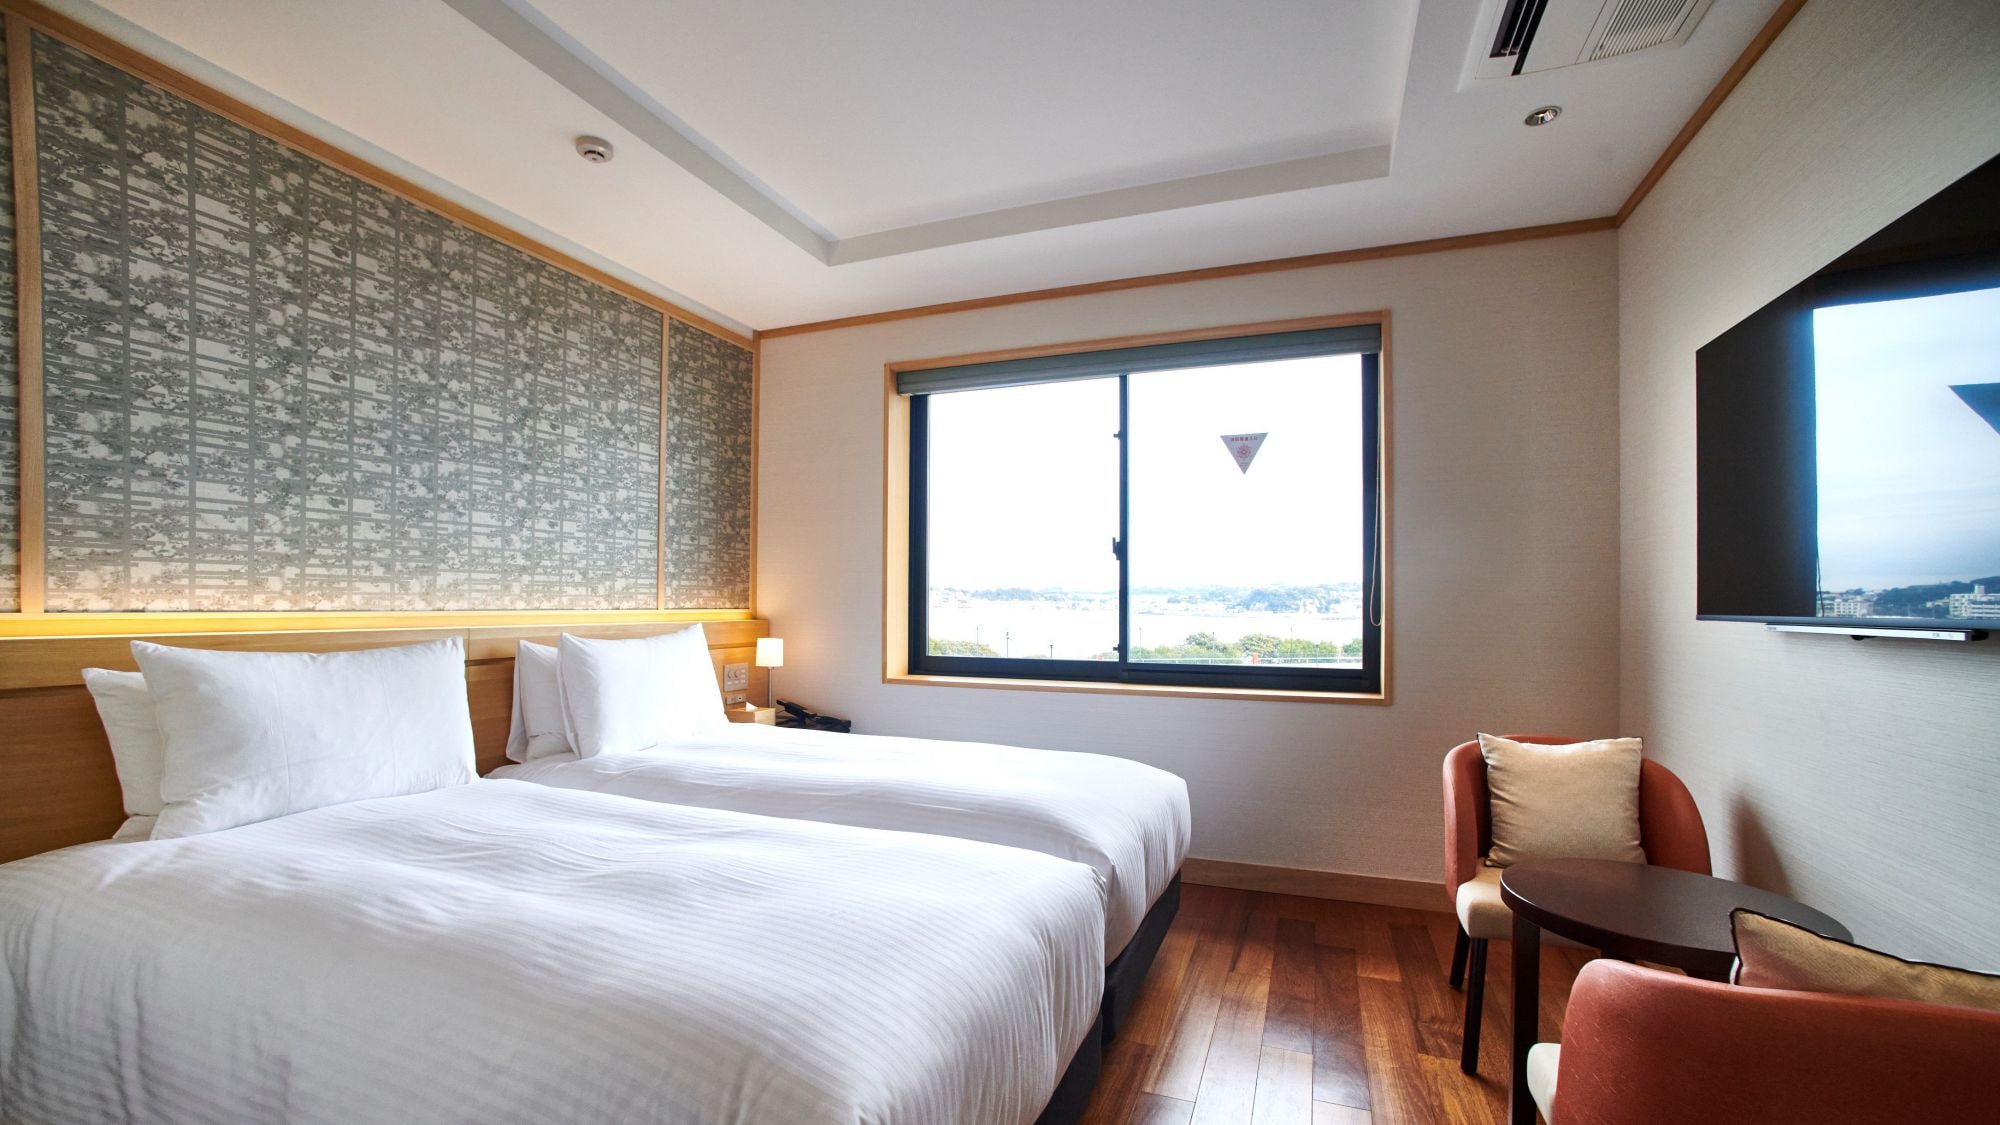 ■ "Enoshima Hotel" standard guest room "Hollywood Twin Room"